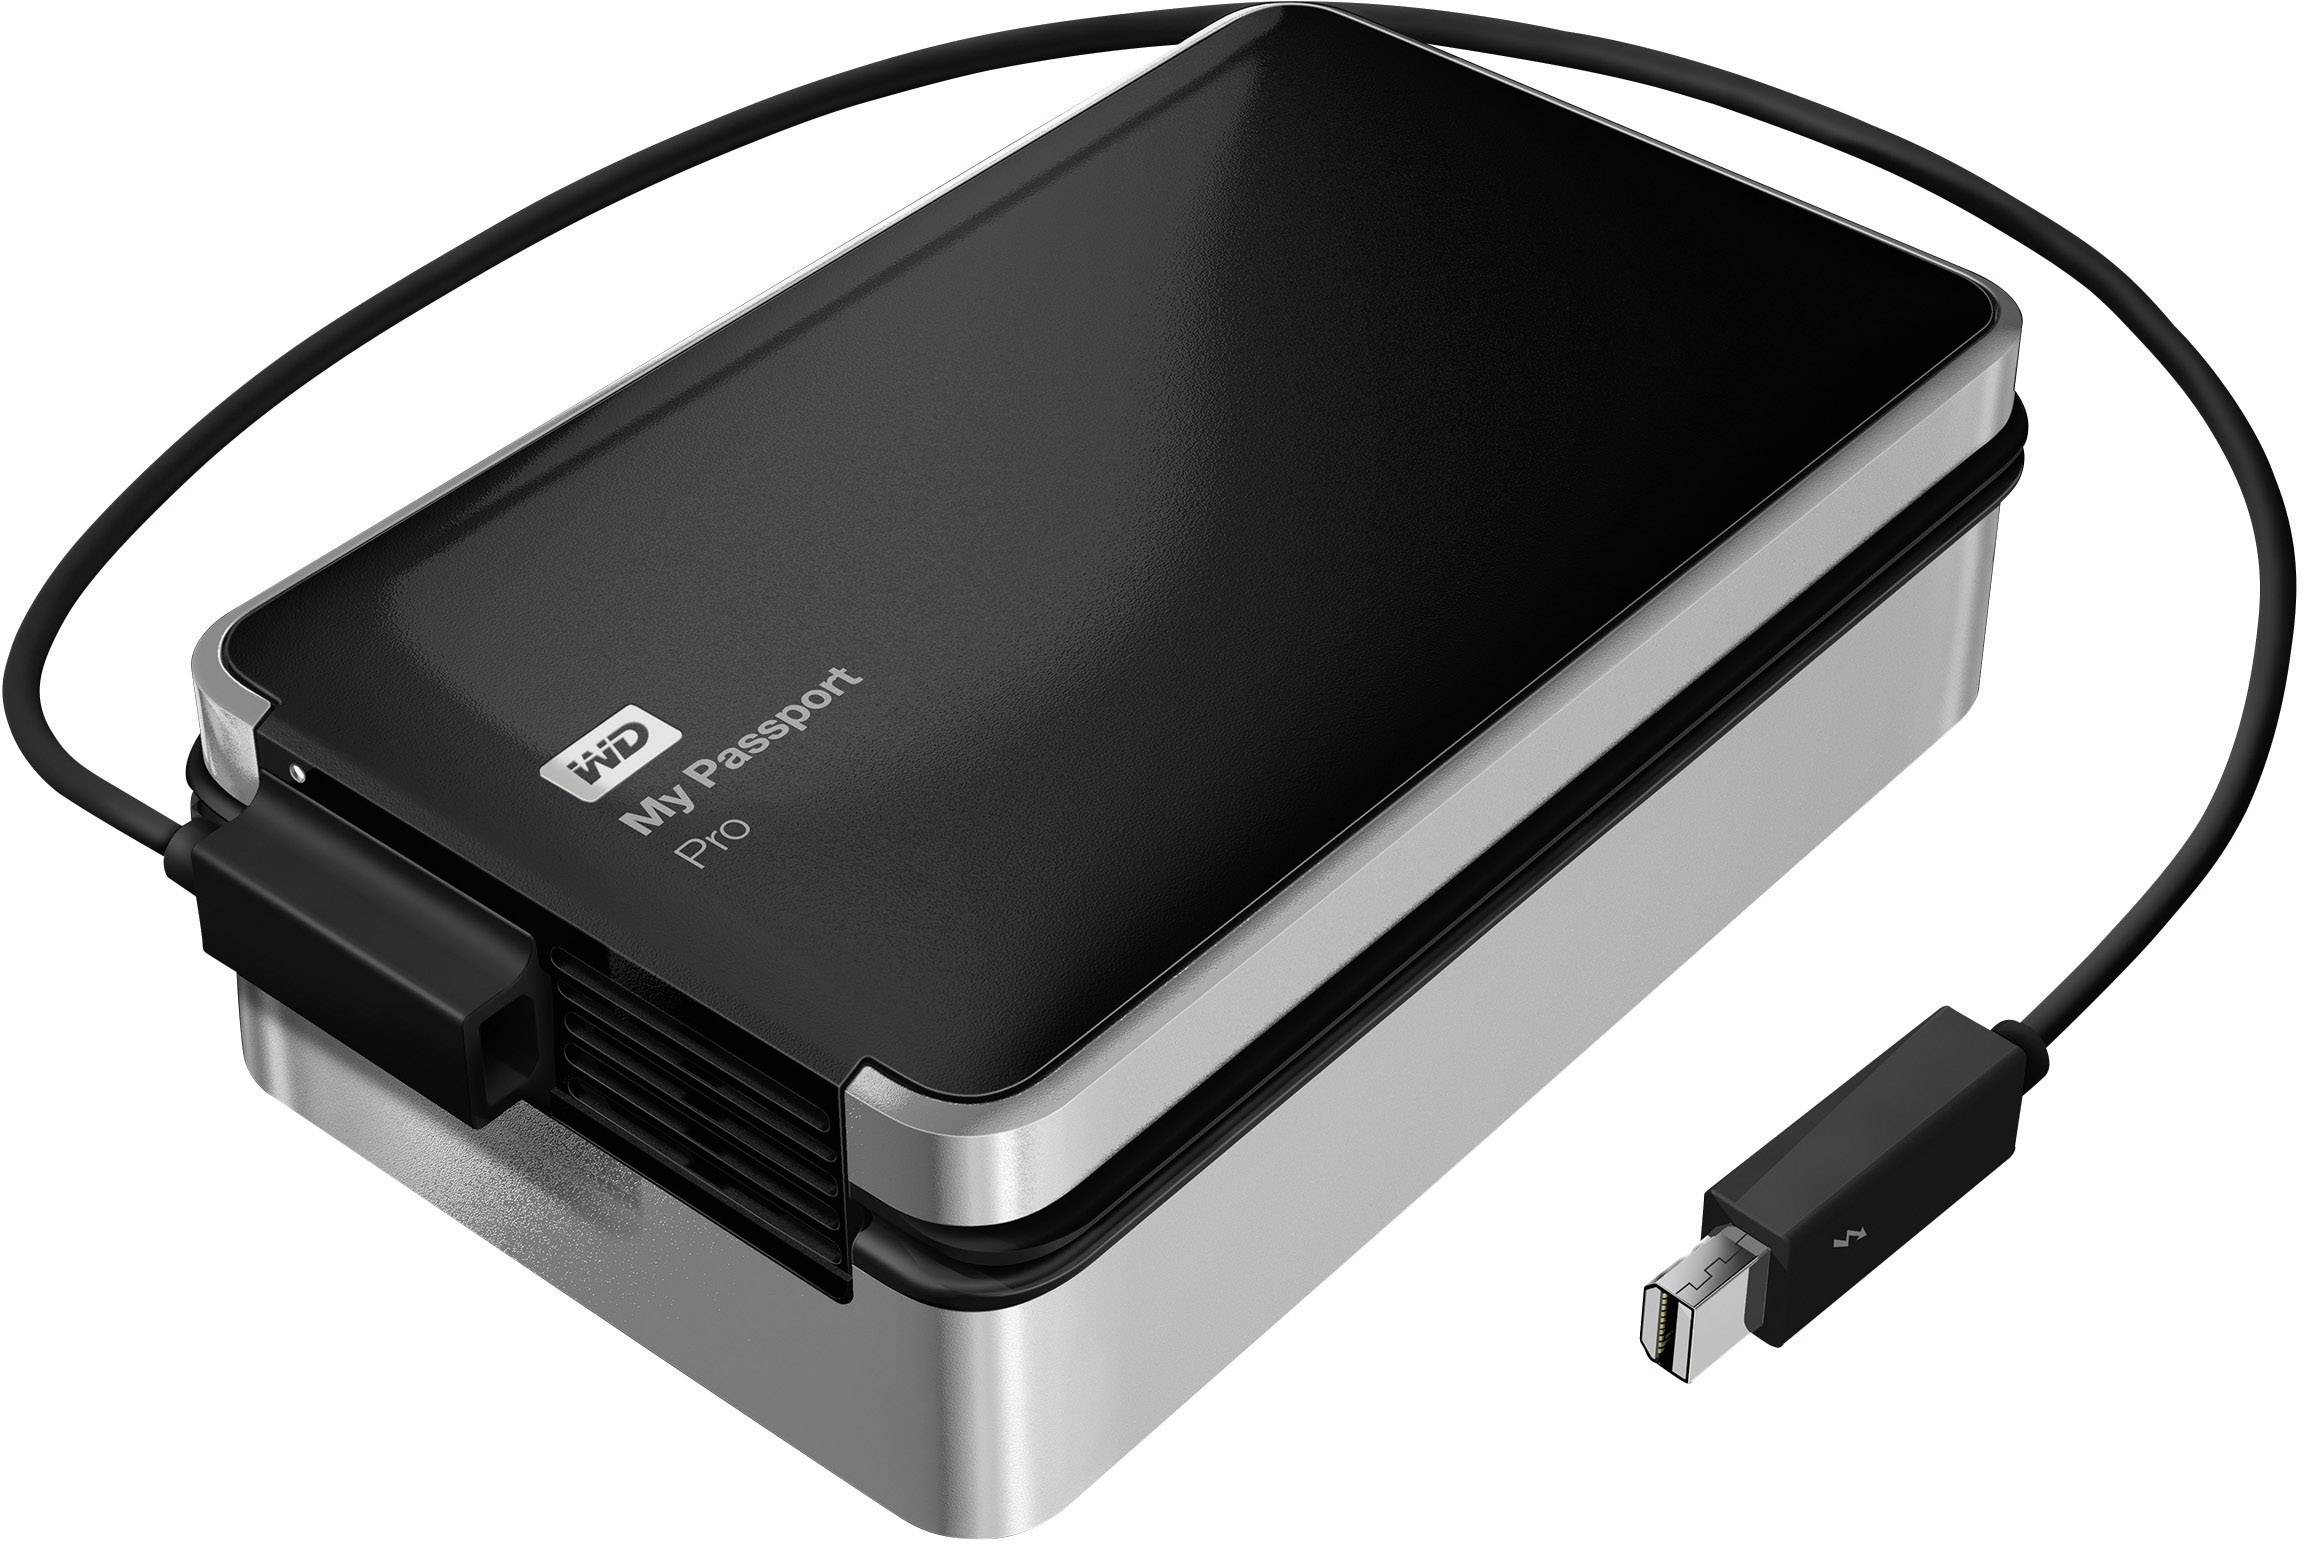 macbook pro thunderbolt external hard drive